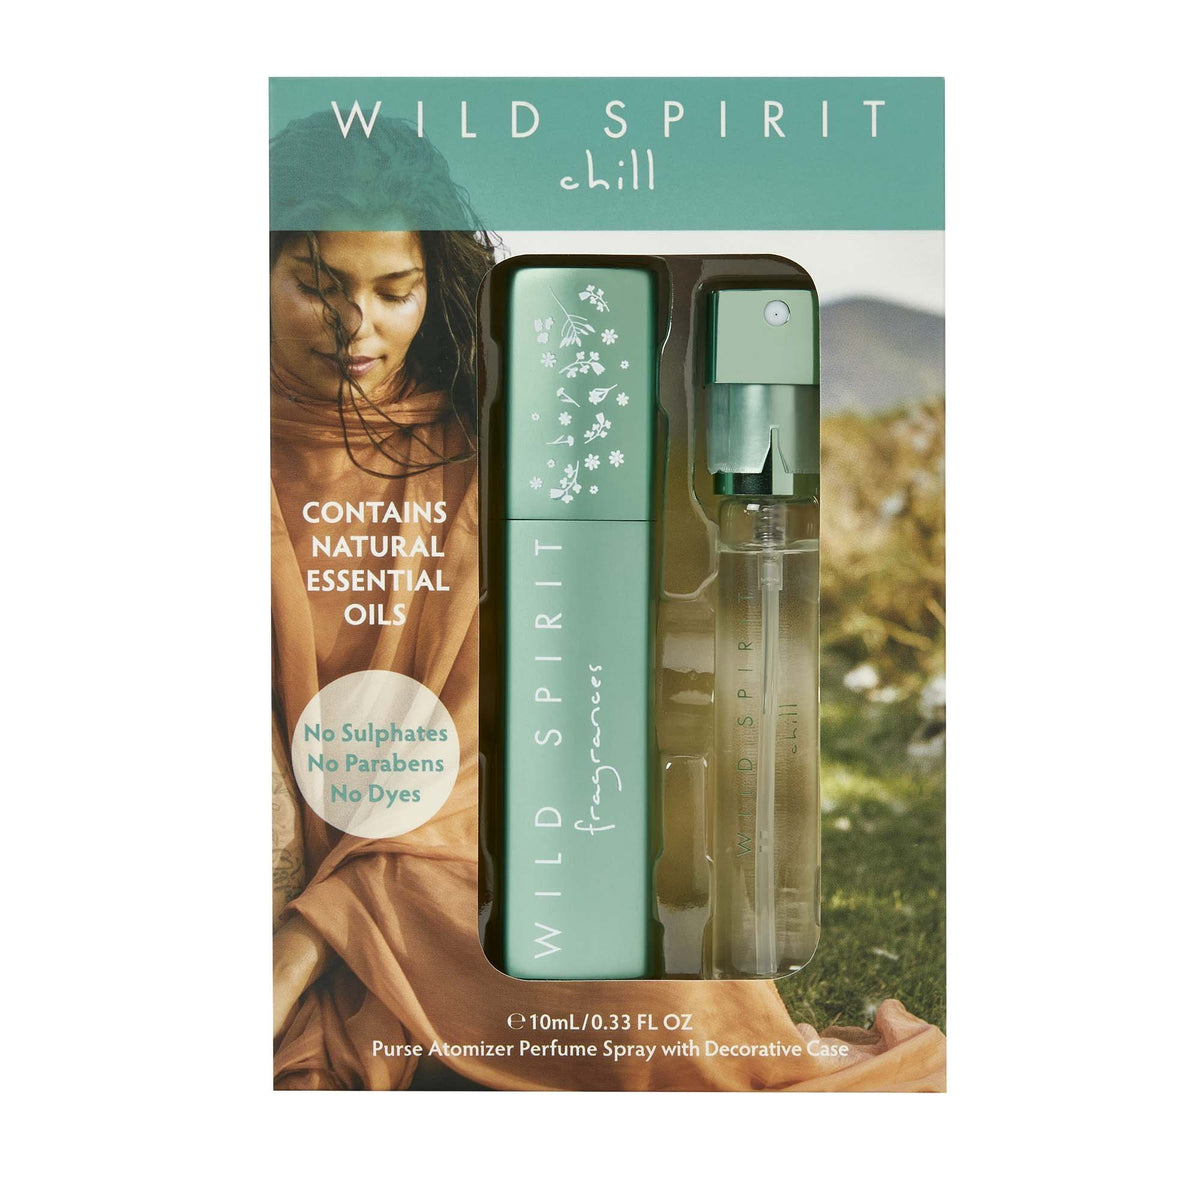 Chill Perfume Atomizer - Wild Spirit